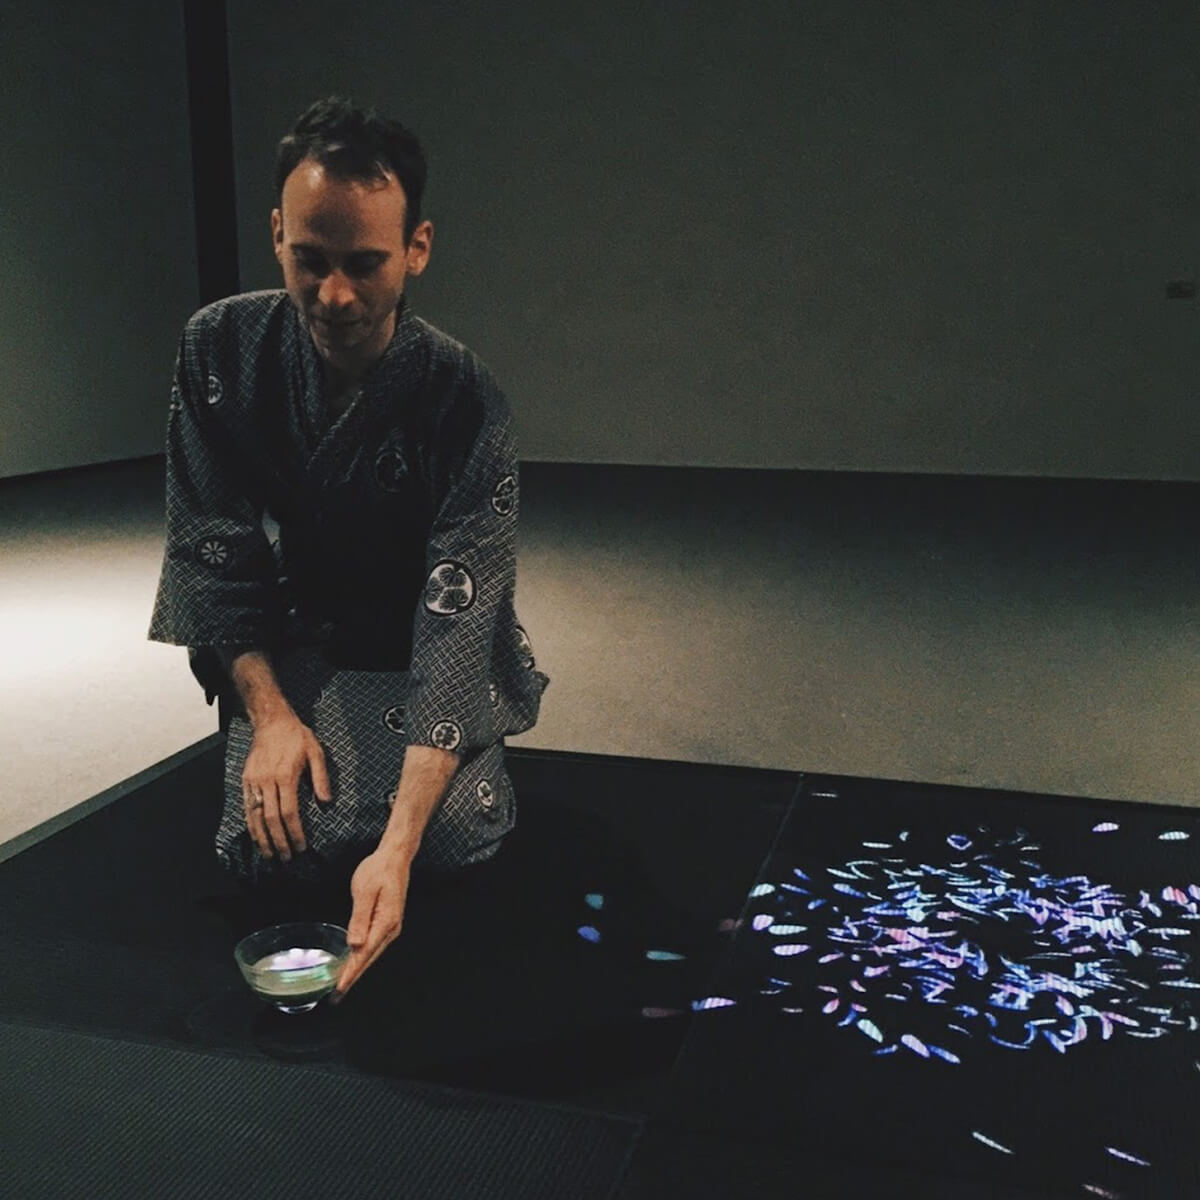 Elliott Davis demonstrates a teamLab artwork with a teacup and virtual flowers.